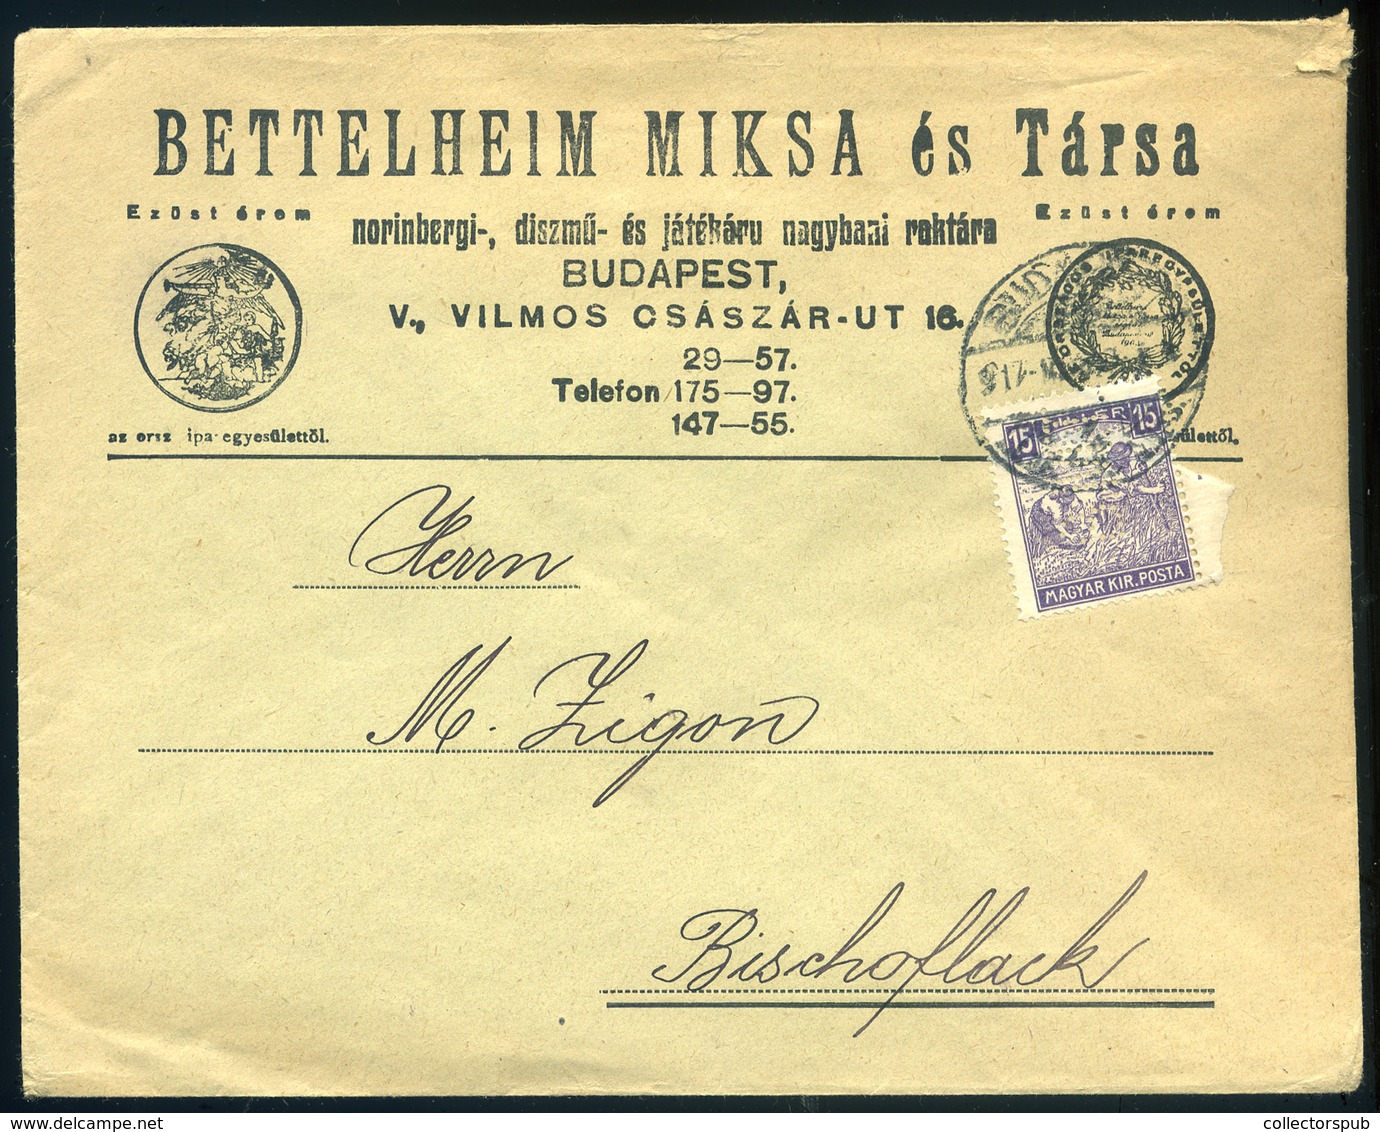 98161 BUDAPEST 1917. Céges Levél, Céglyukasztásos Bélyeggel, Bettelheim  /  1917 Corp. Letter, Corp Punched Stamp, Bette - Used Stamps